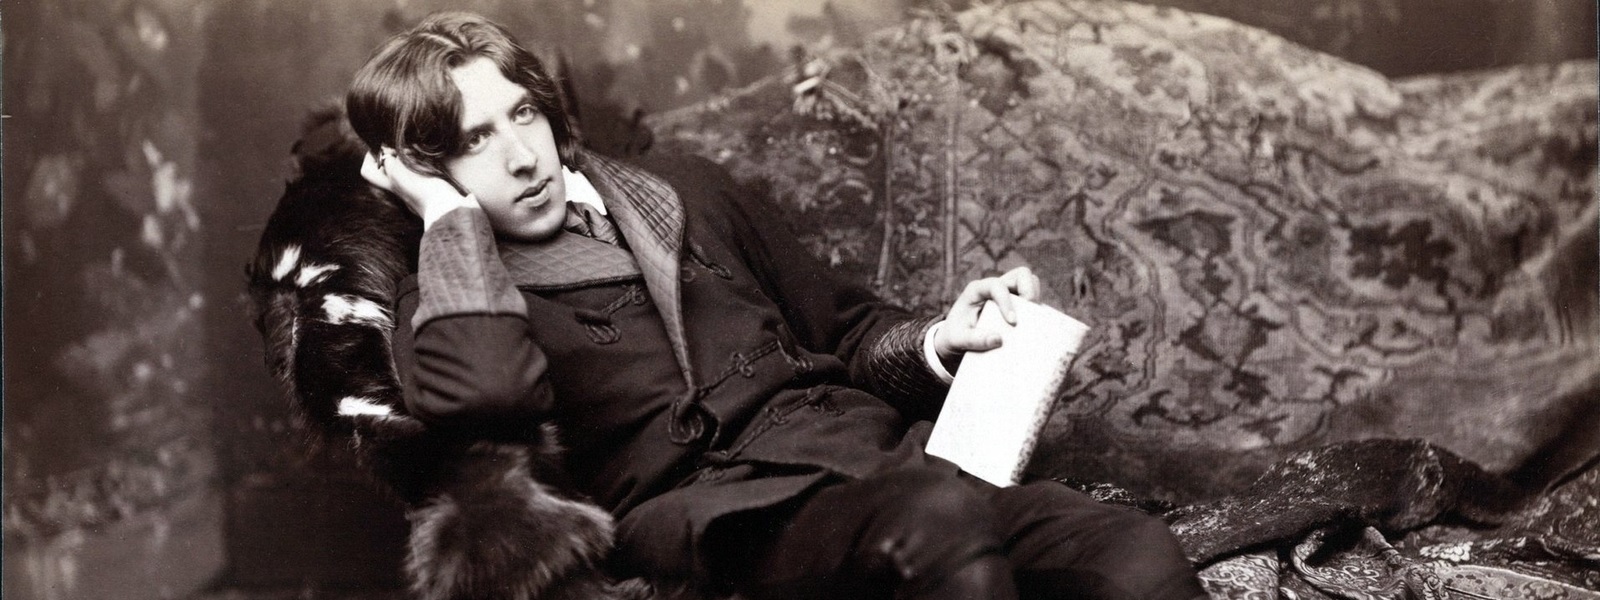 Irish literary genius Oscar Wilde